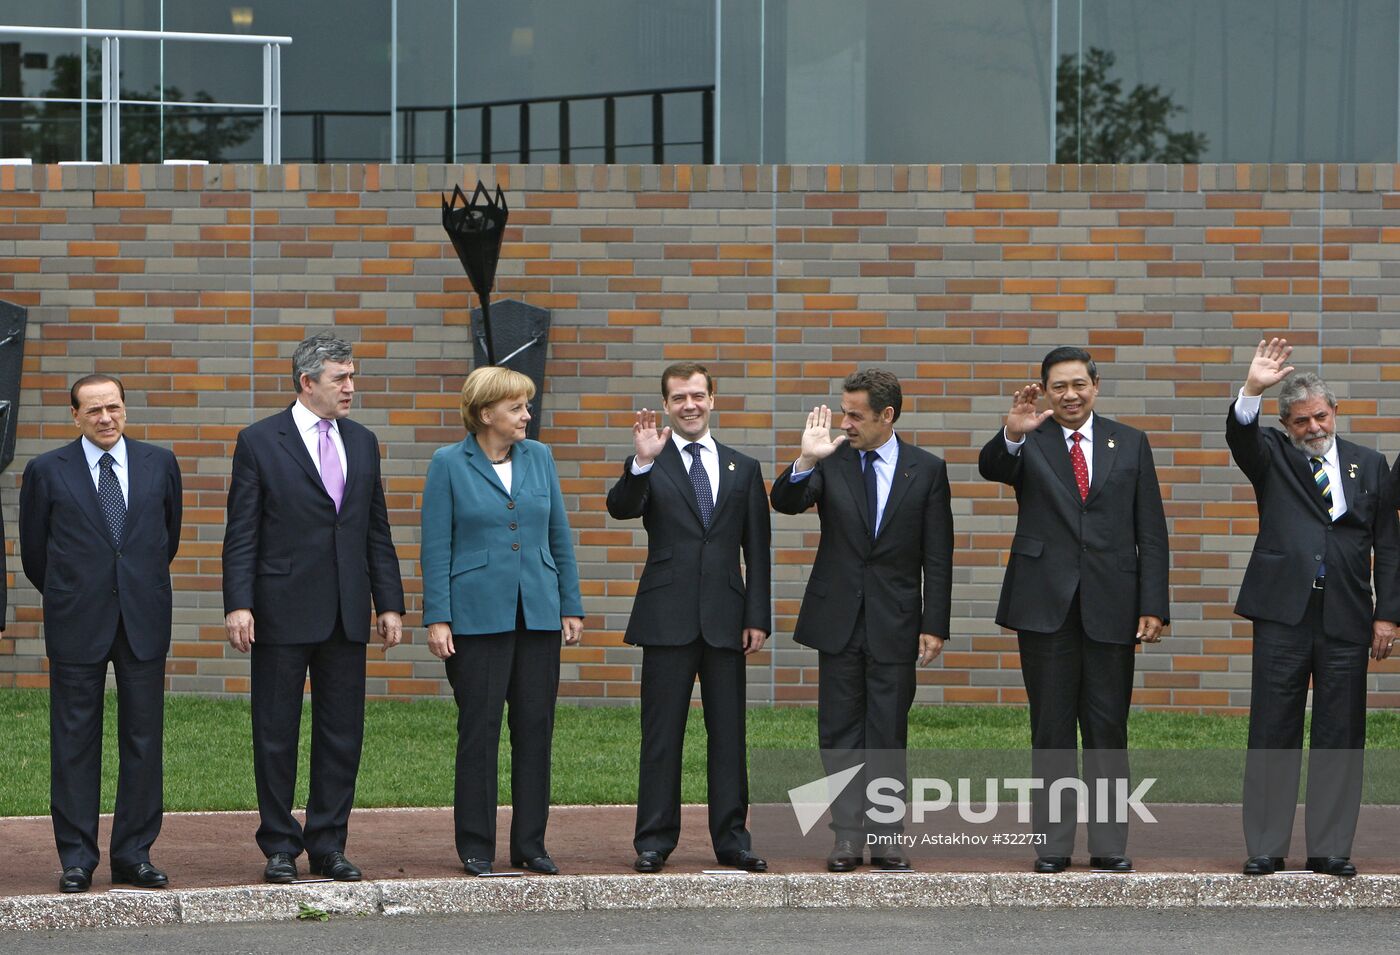 The G8 summit